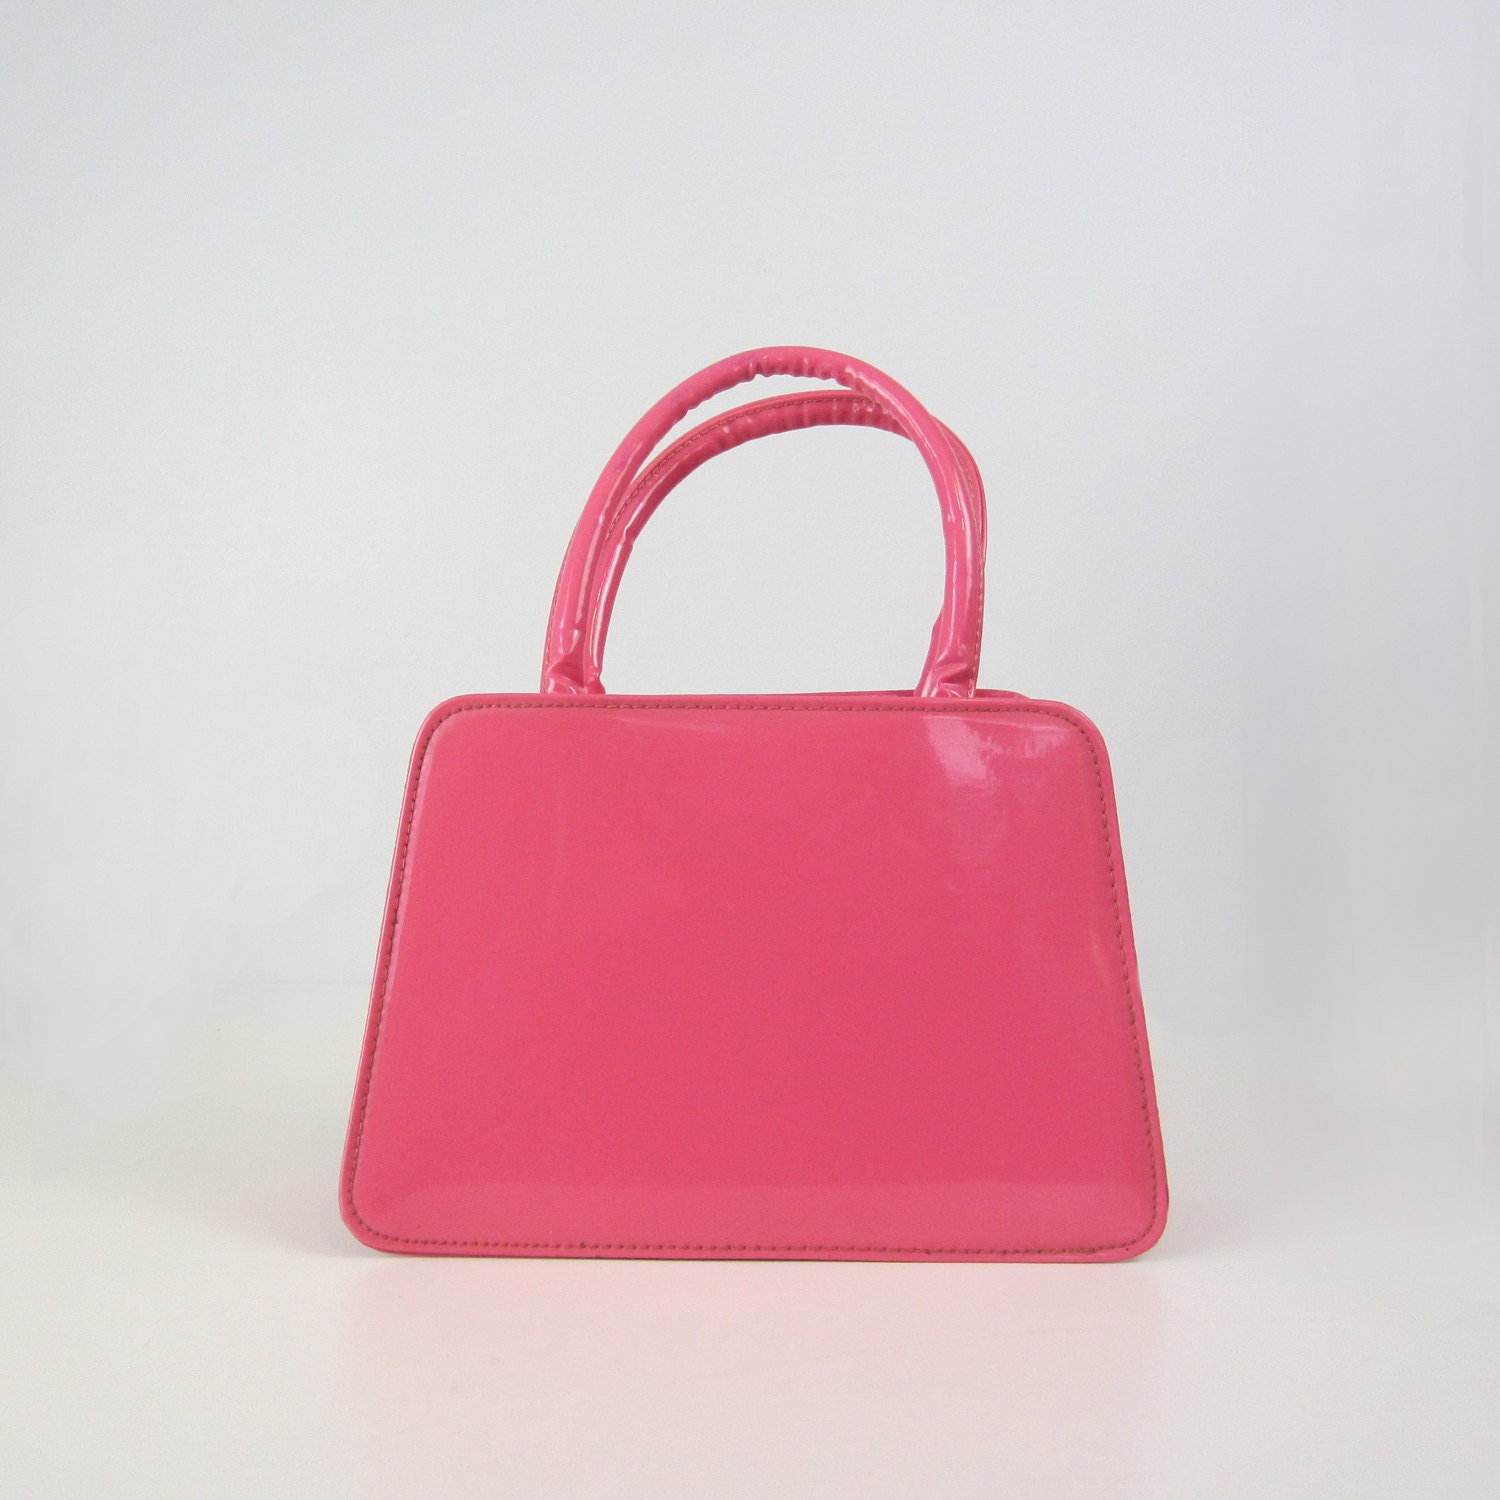 vintage kelly bag / 1950s handbag / pink / fuschia / patent